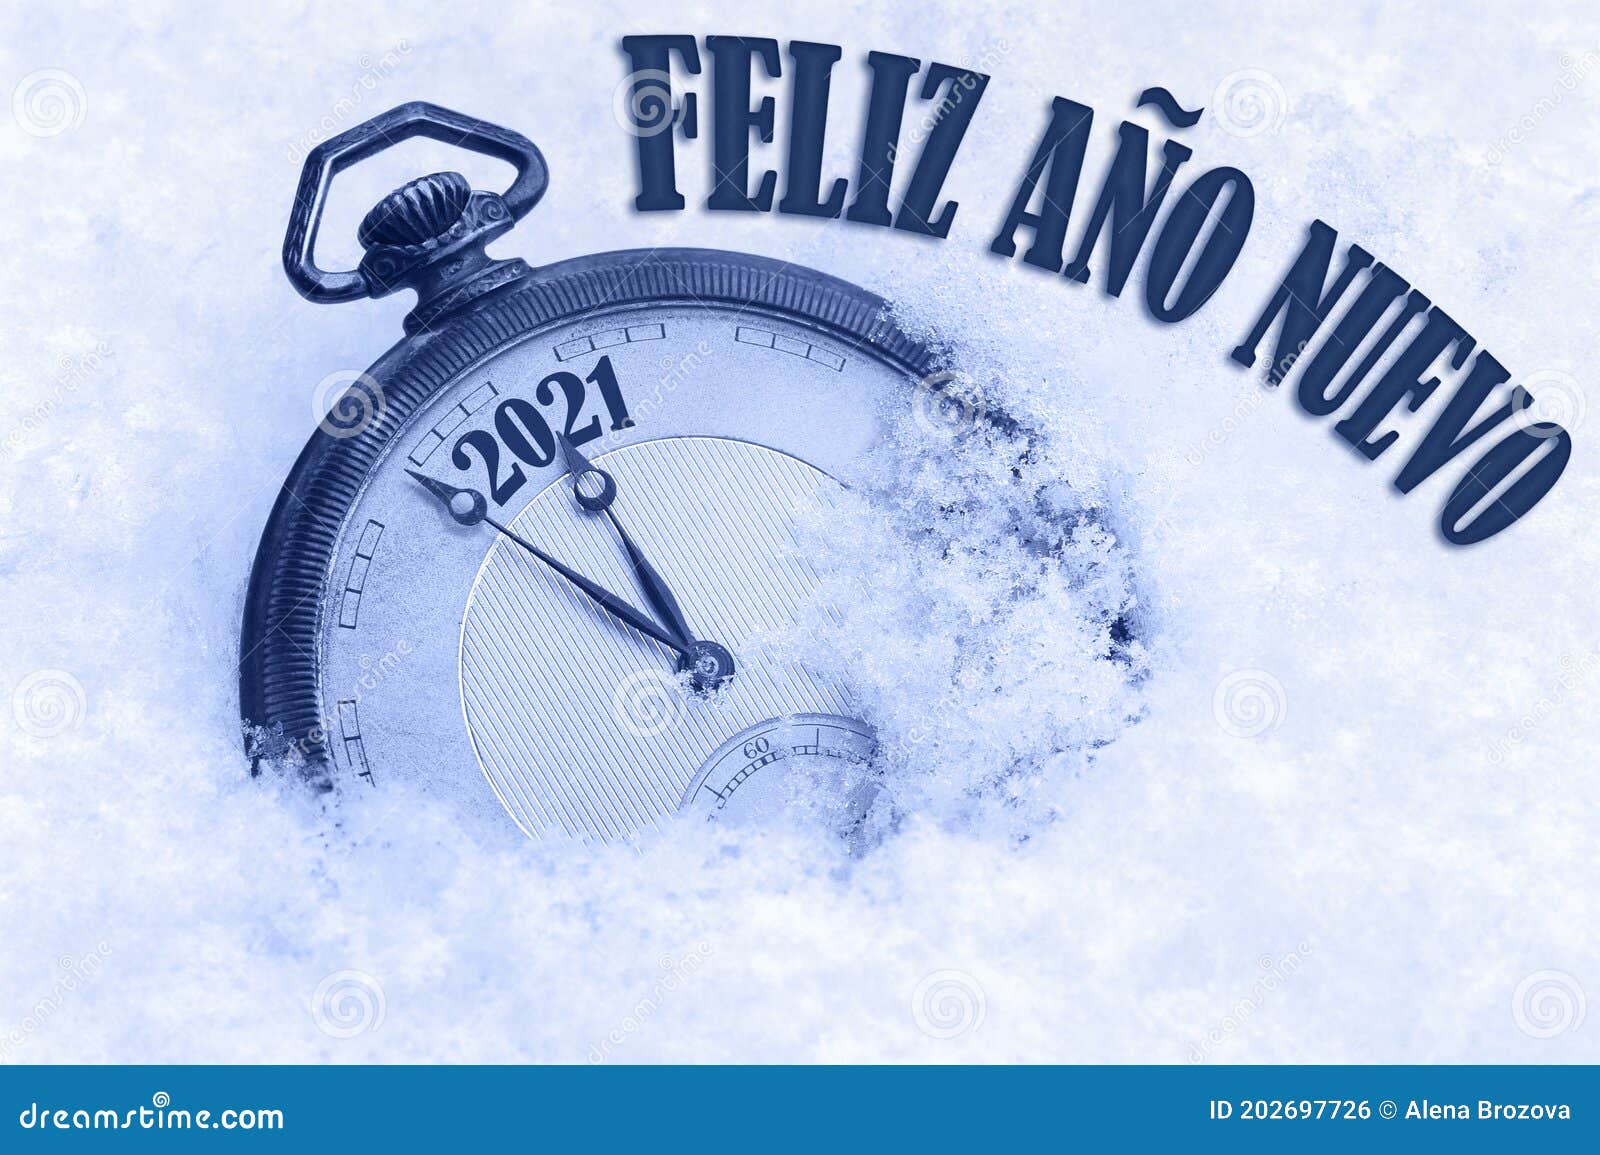 2021 greeting card, happy new year 2021, spanish language, feliz ano nuevo text, countdown to midnight